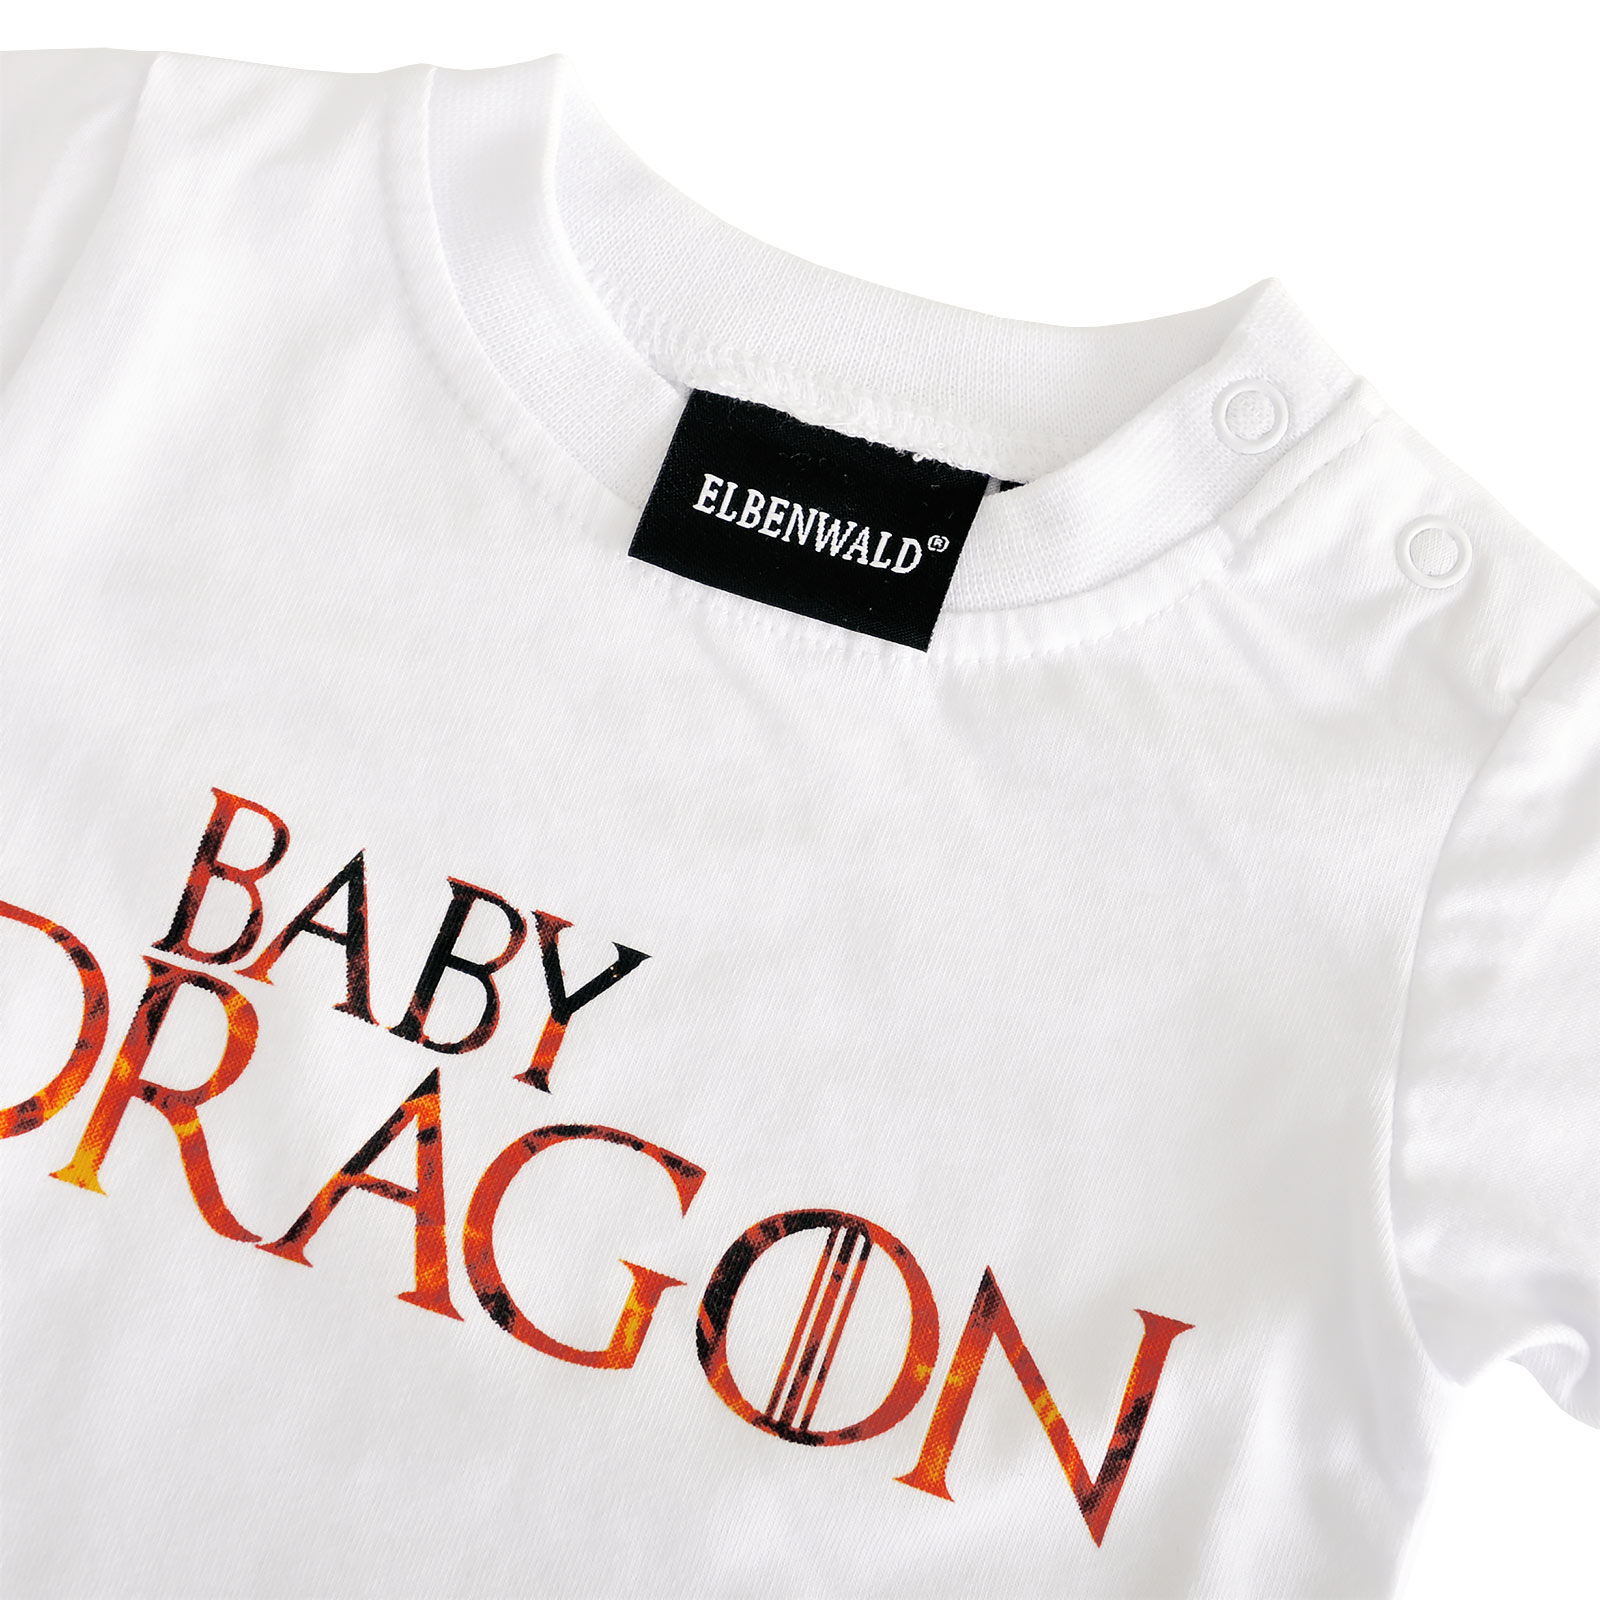 Baby Dragon - Kinder T-Shirt weiß